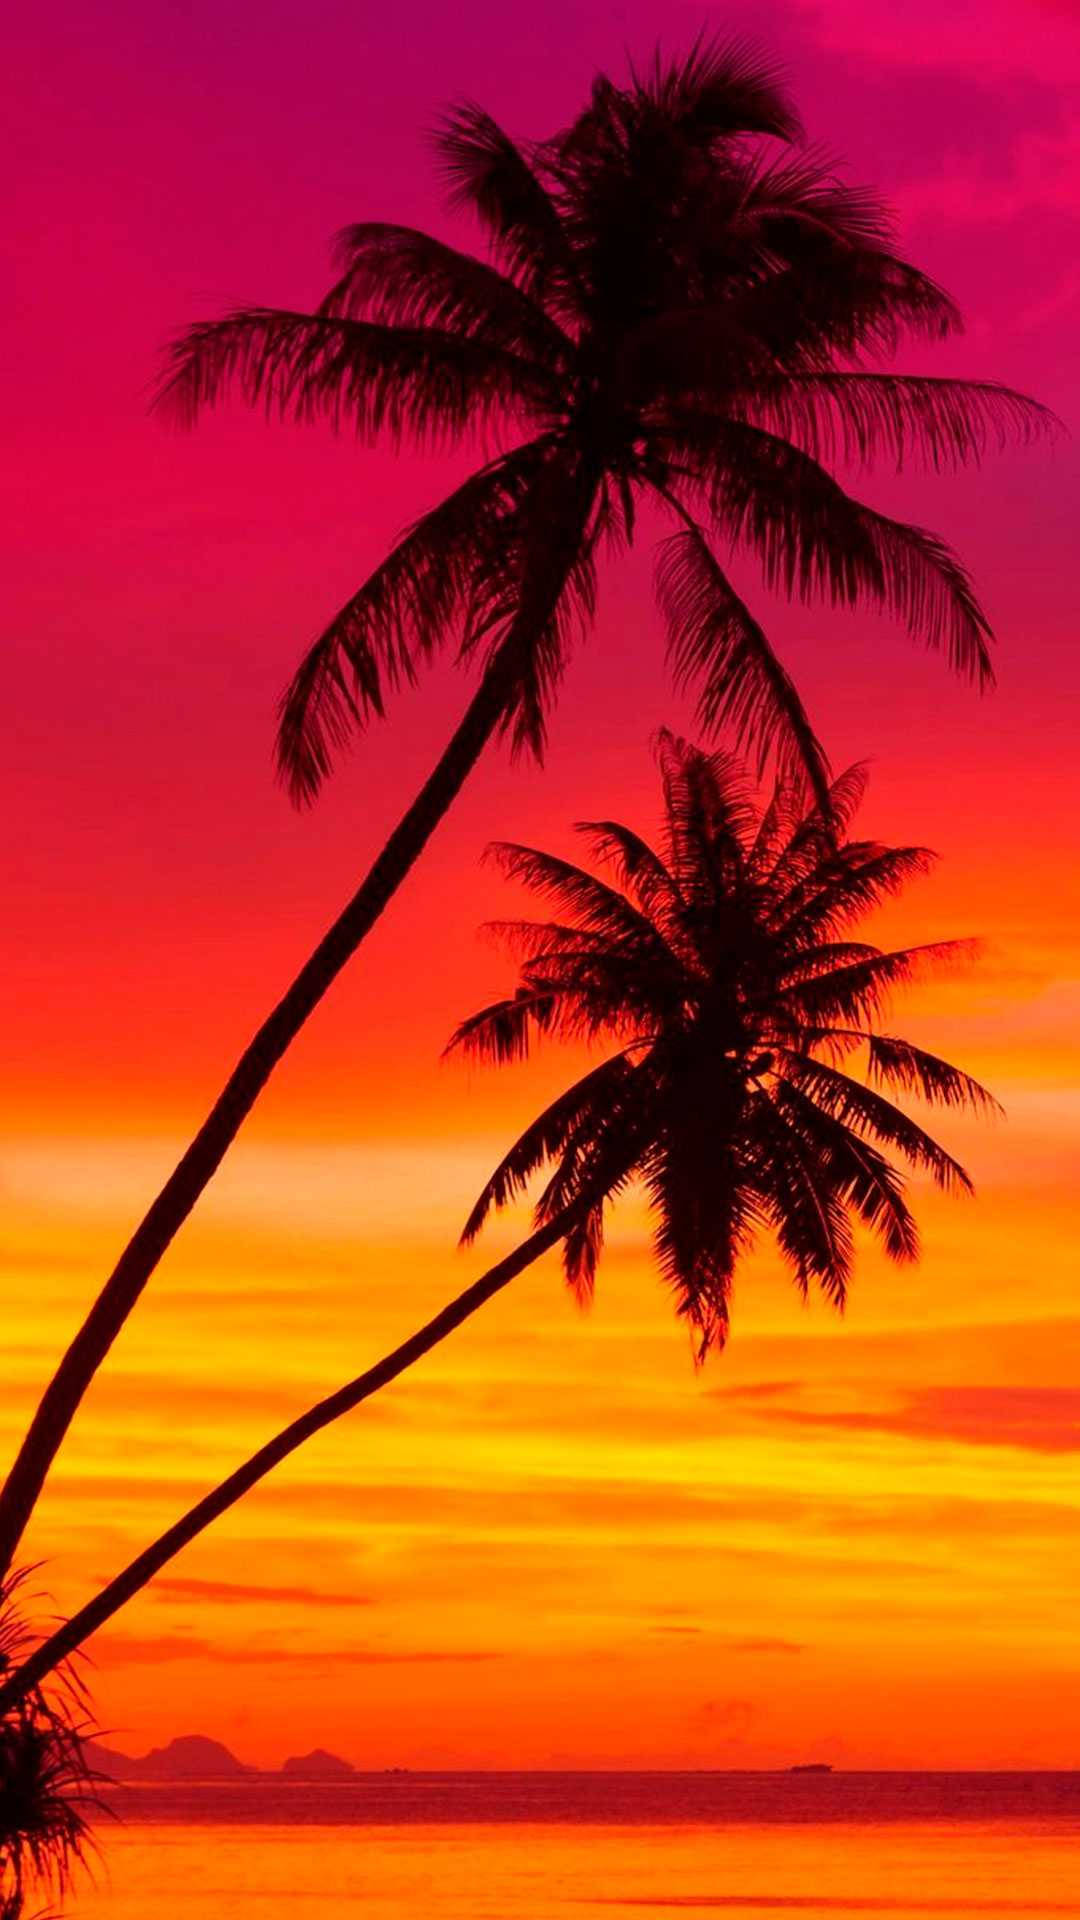 Sunset And Palm Trees Malibu Iphone